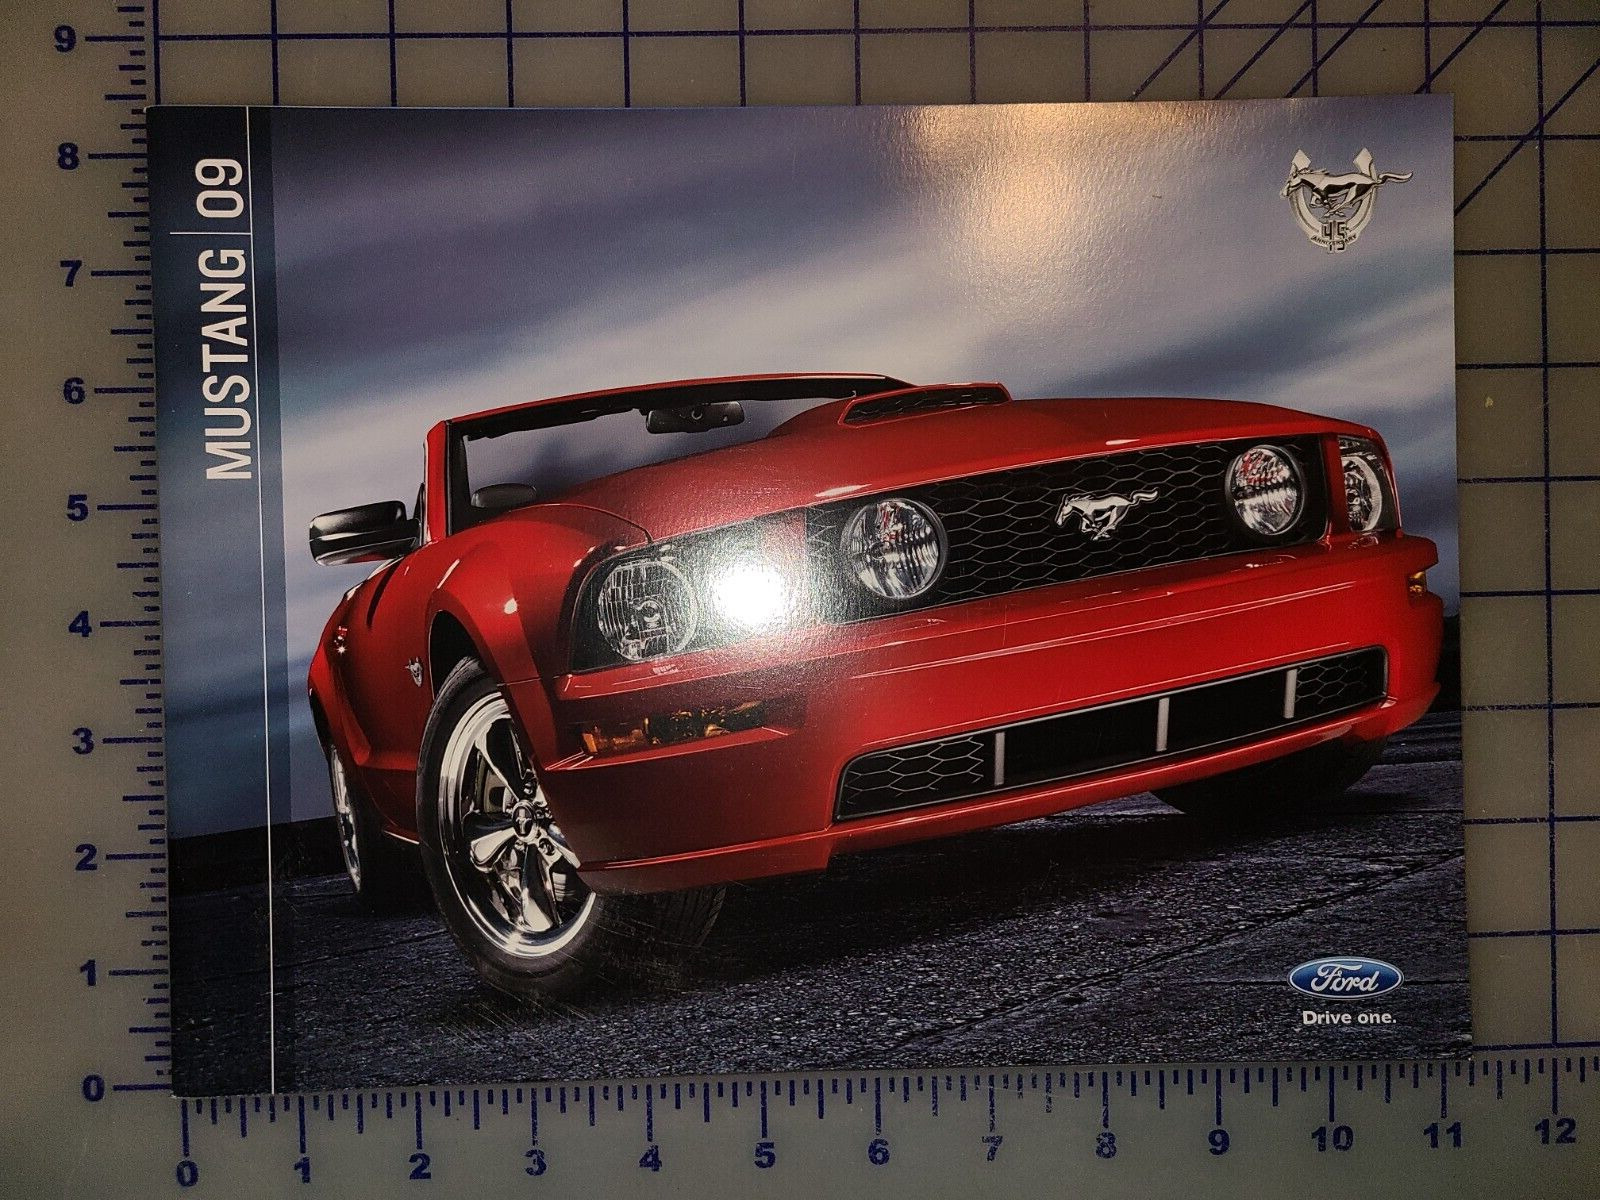 2009 Ford Mustang Brochure V6 GT Shelby GT500 GT500KR Bullitt